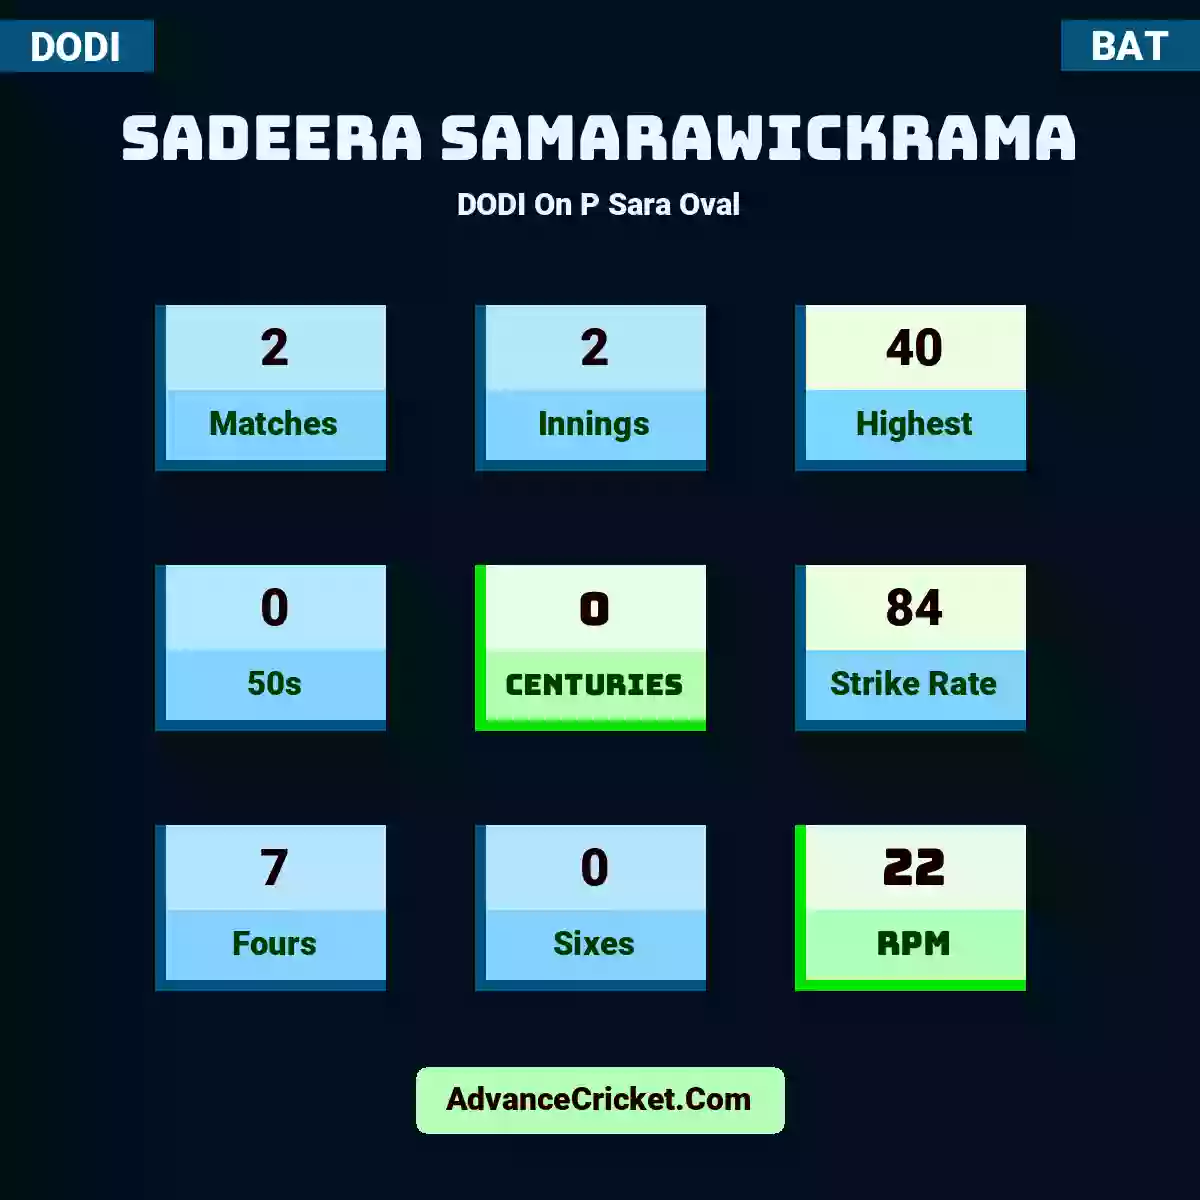 Sadeera Samarawickrama DODI  On P Sara Oval, Sadeera Samarawickrama played 2 matches, scored 40 runs as highest, 0 half-centuries, and 0 centuries, with a strike rate of 84. S.Samarawickrama hit 7 fours and 0 sixes, with an RPM of 22.